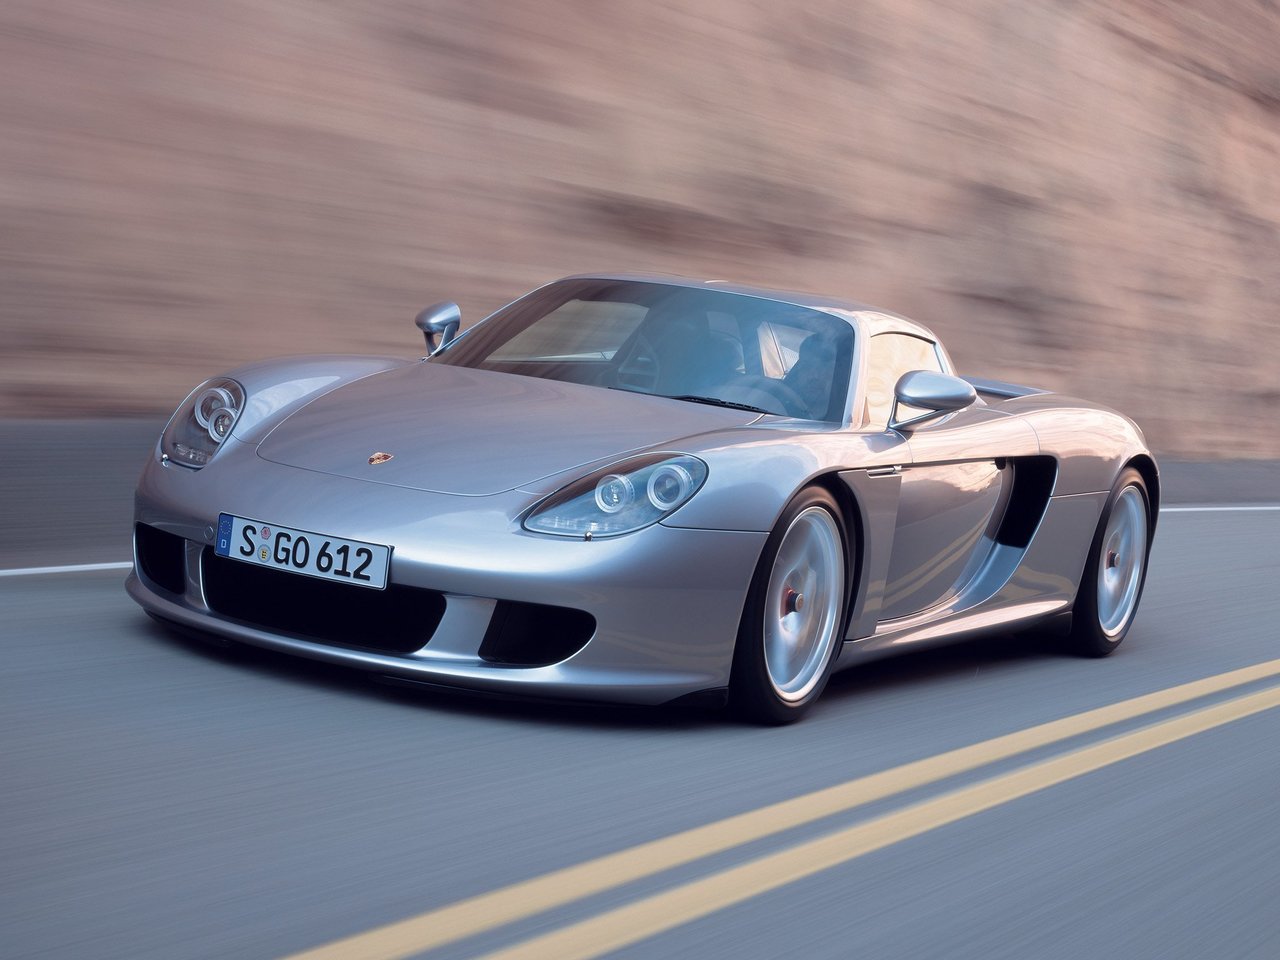 Снижаем расход Porsche Carrera GT на топливо, устанавливаем ГБО